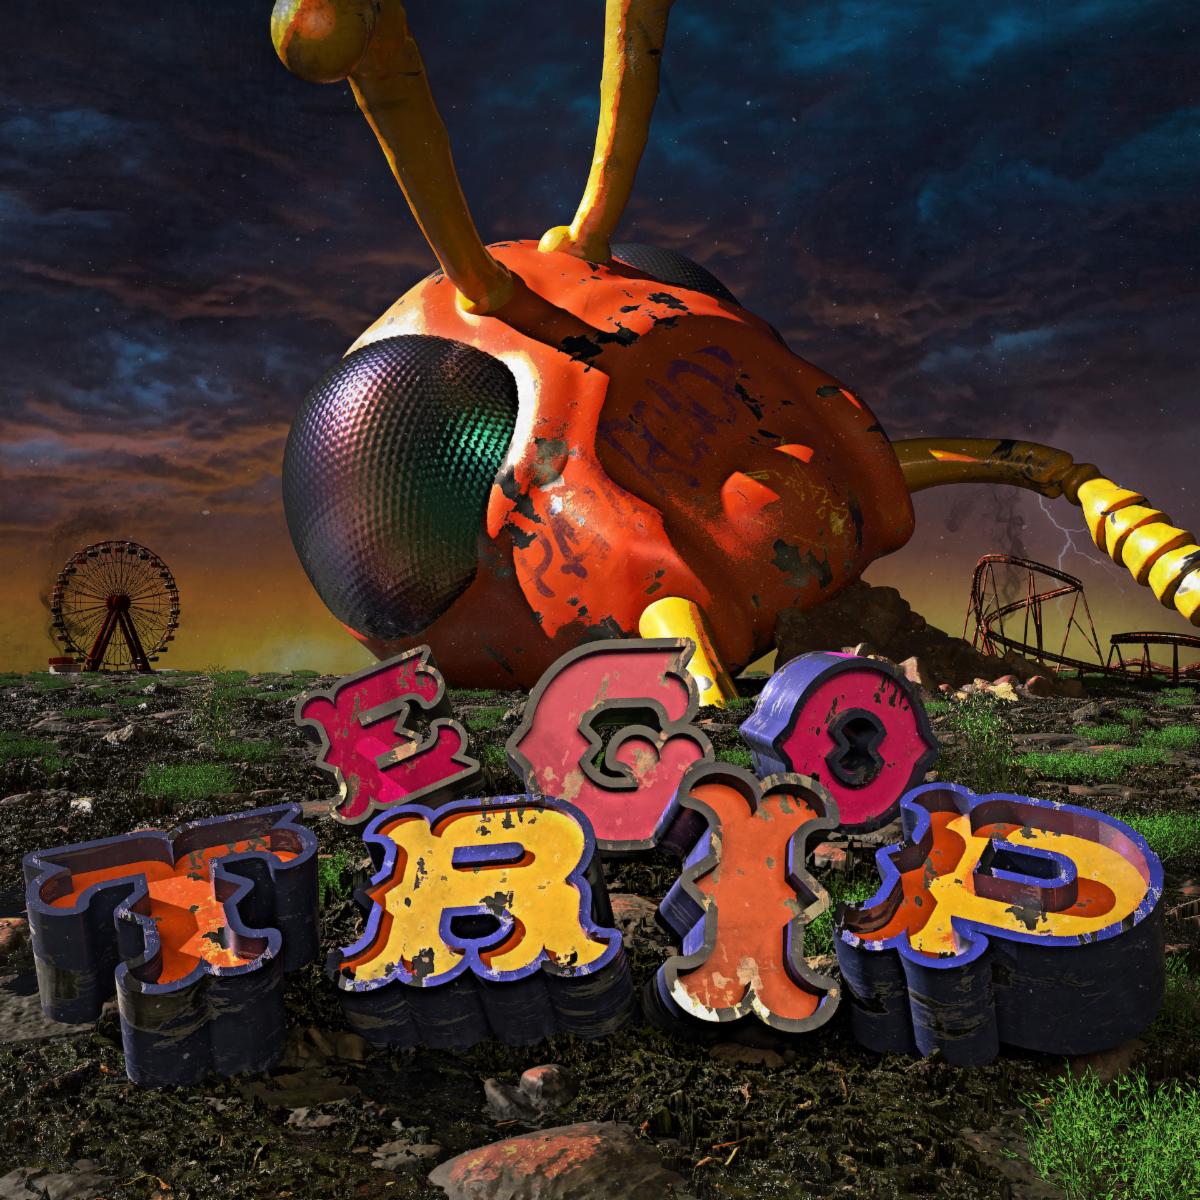 Papa Roach release 11th studio album 'EGO TRIP'